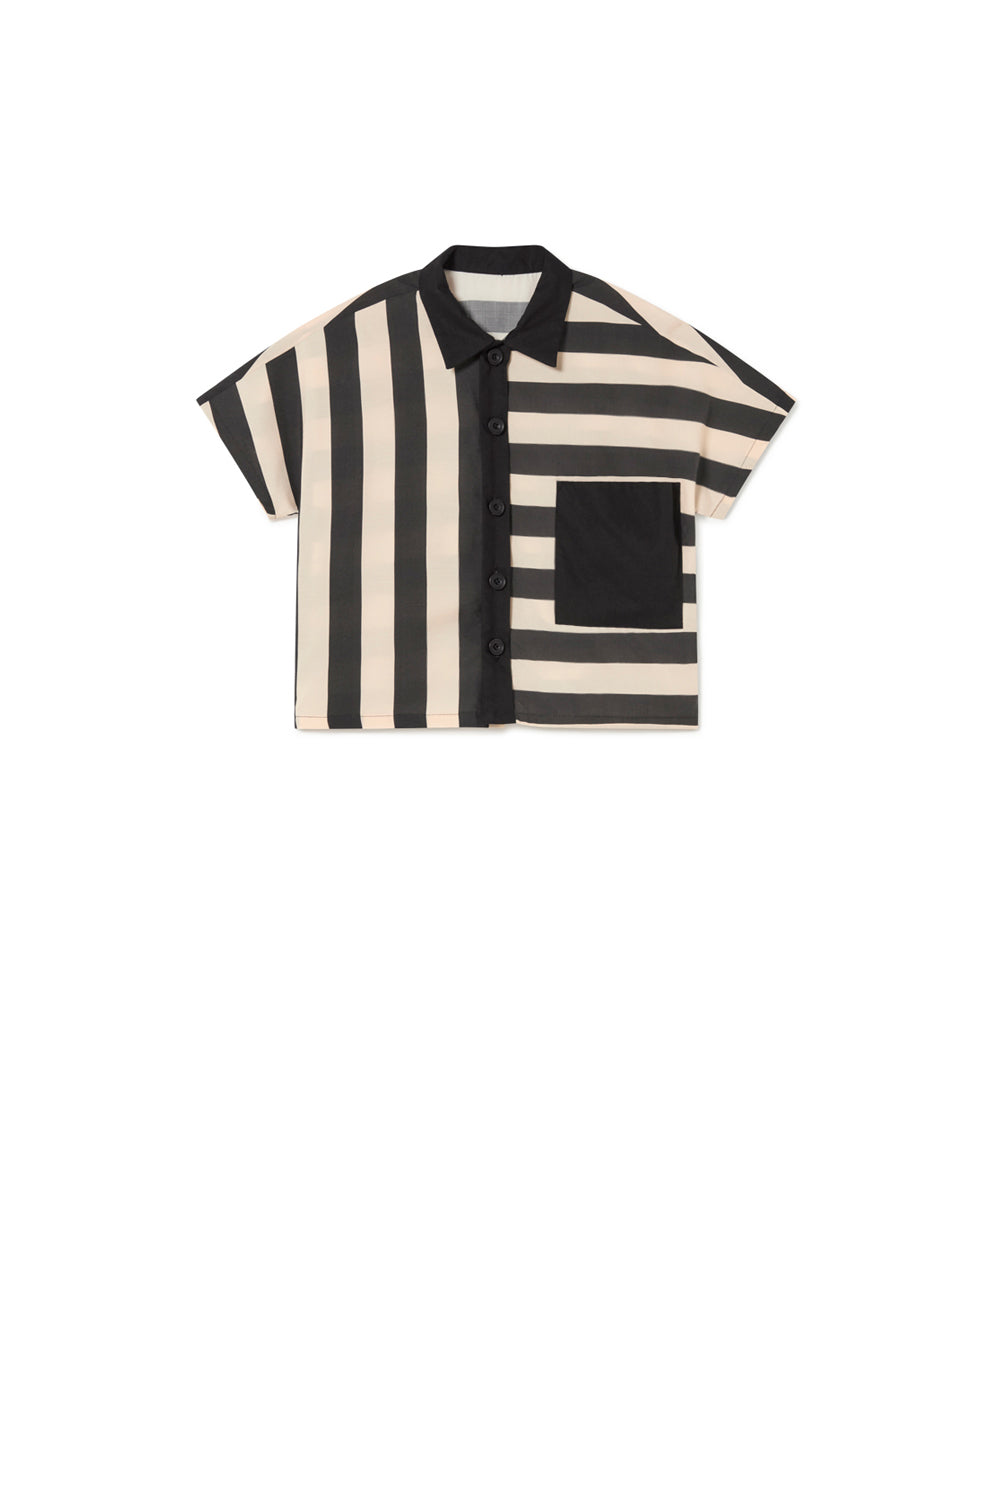 Iconic Lines Shirt-Cream/Black